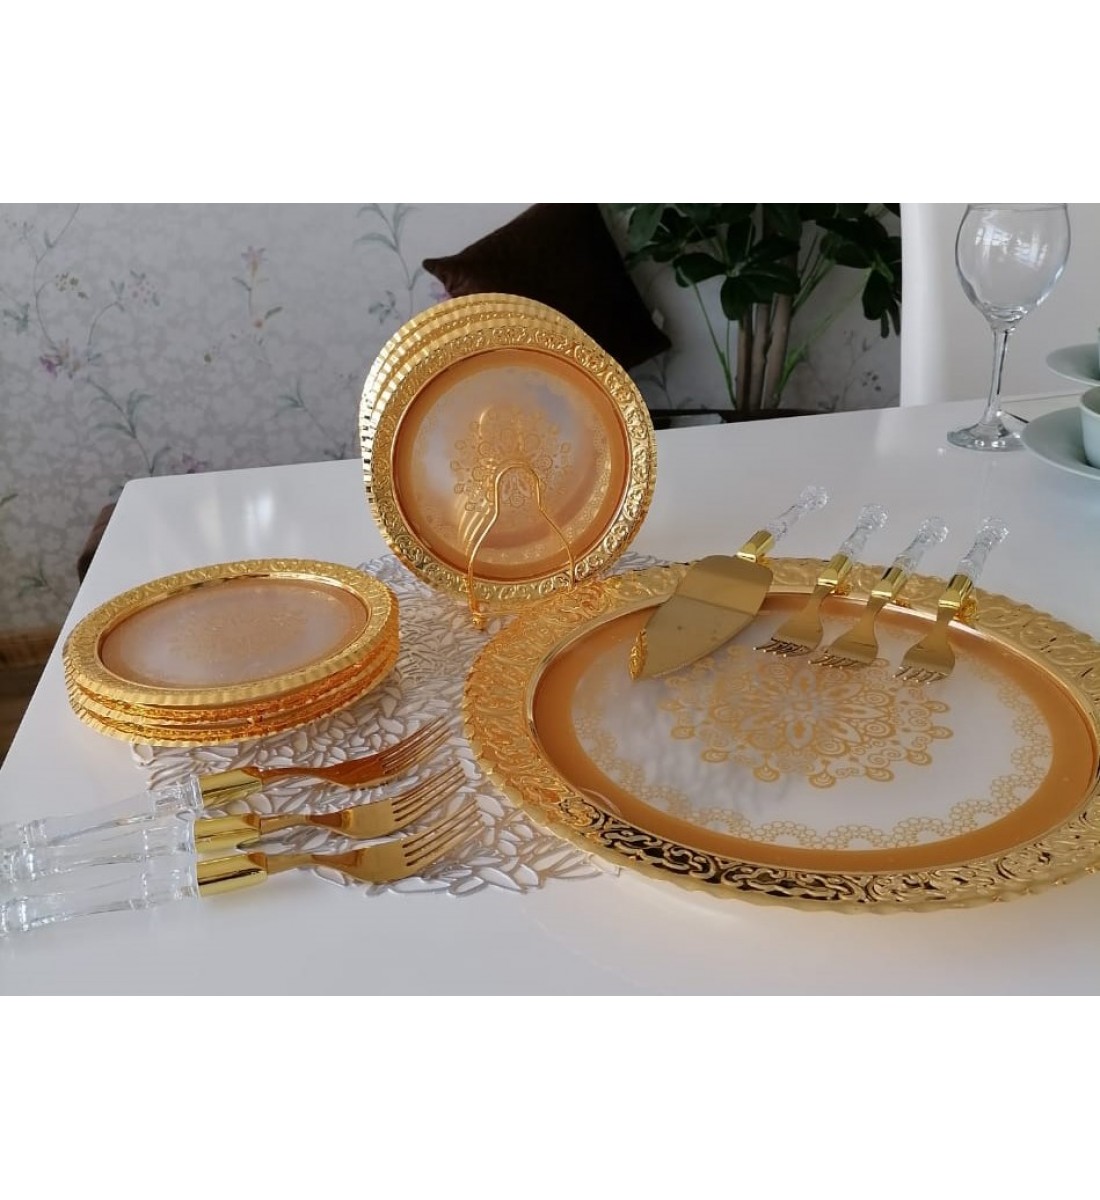 14-piece cake serving plates